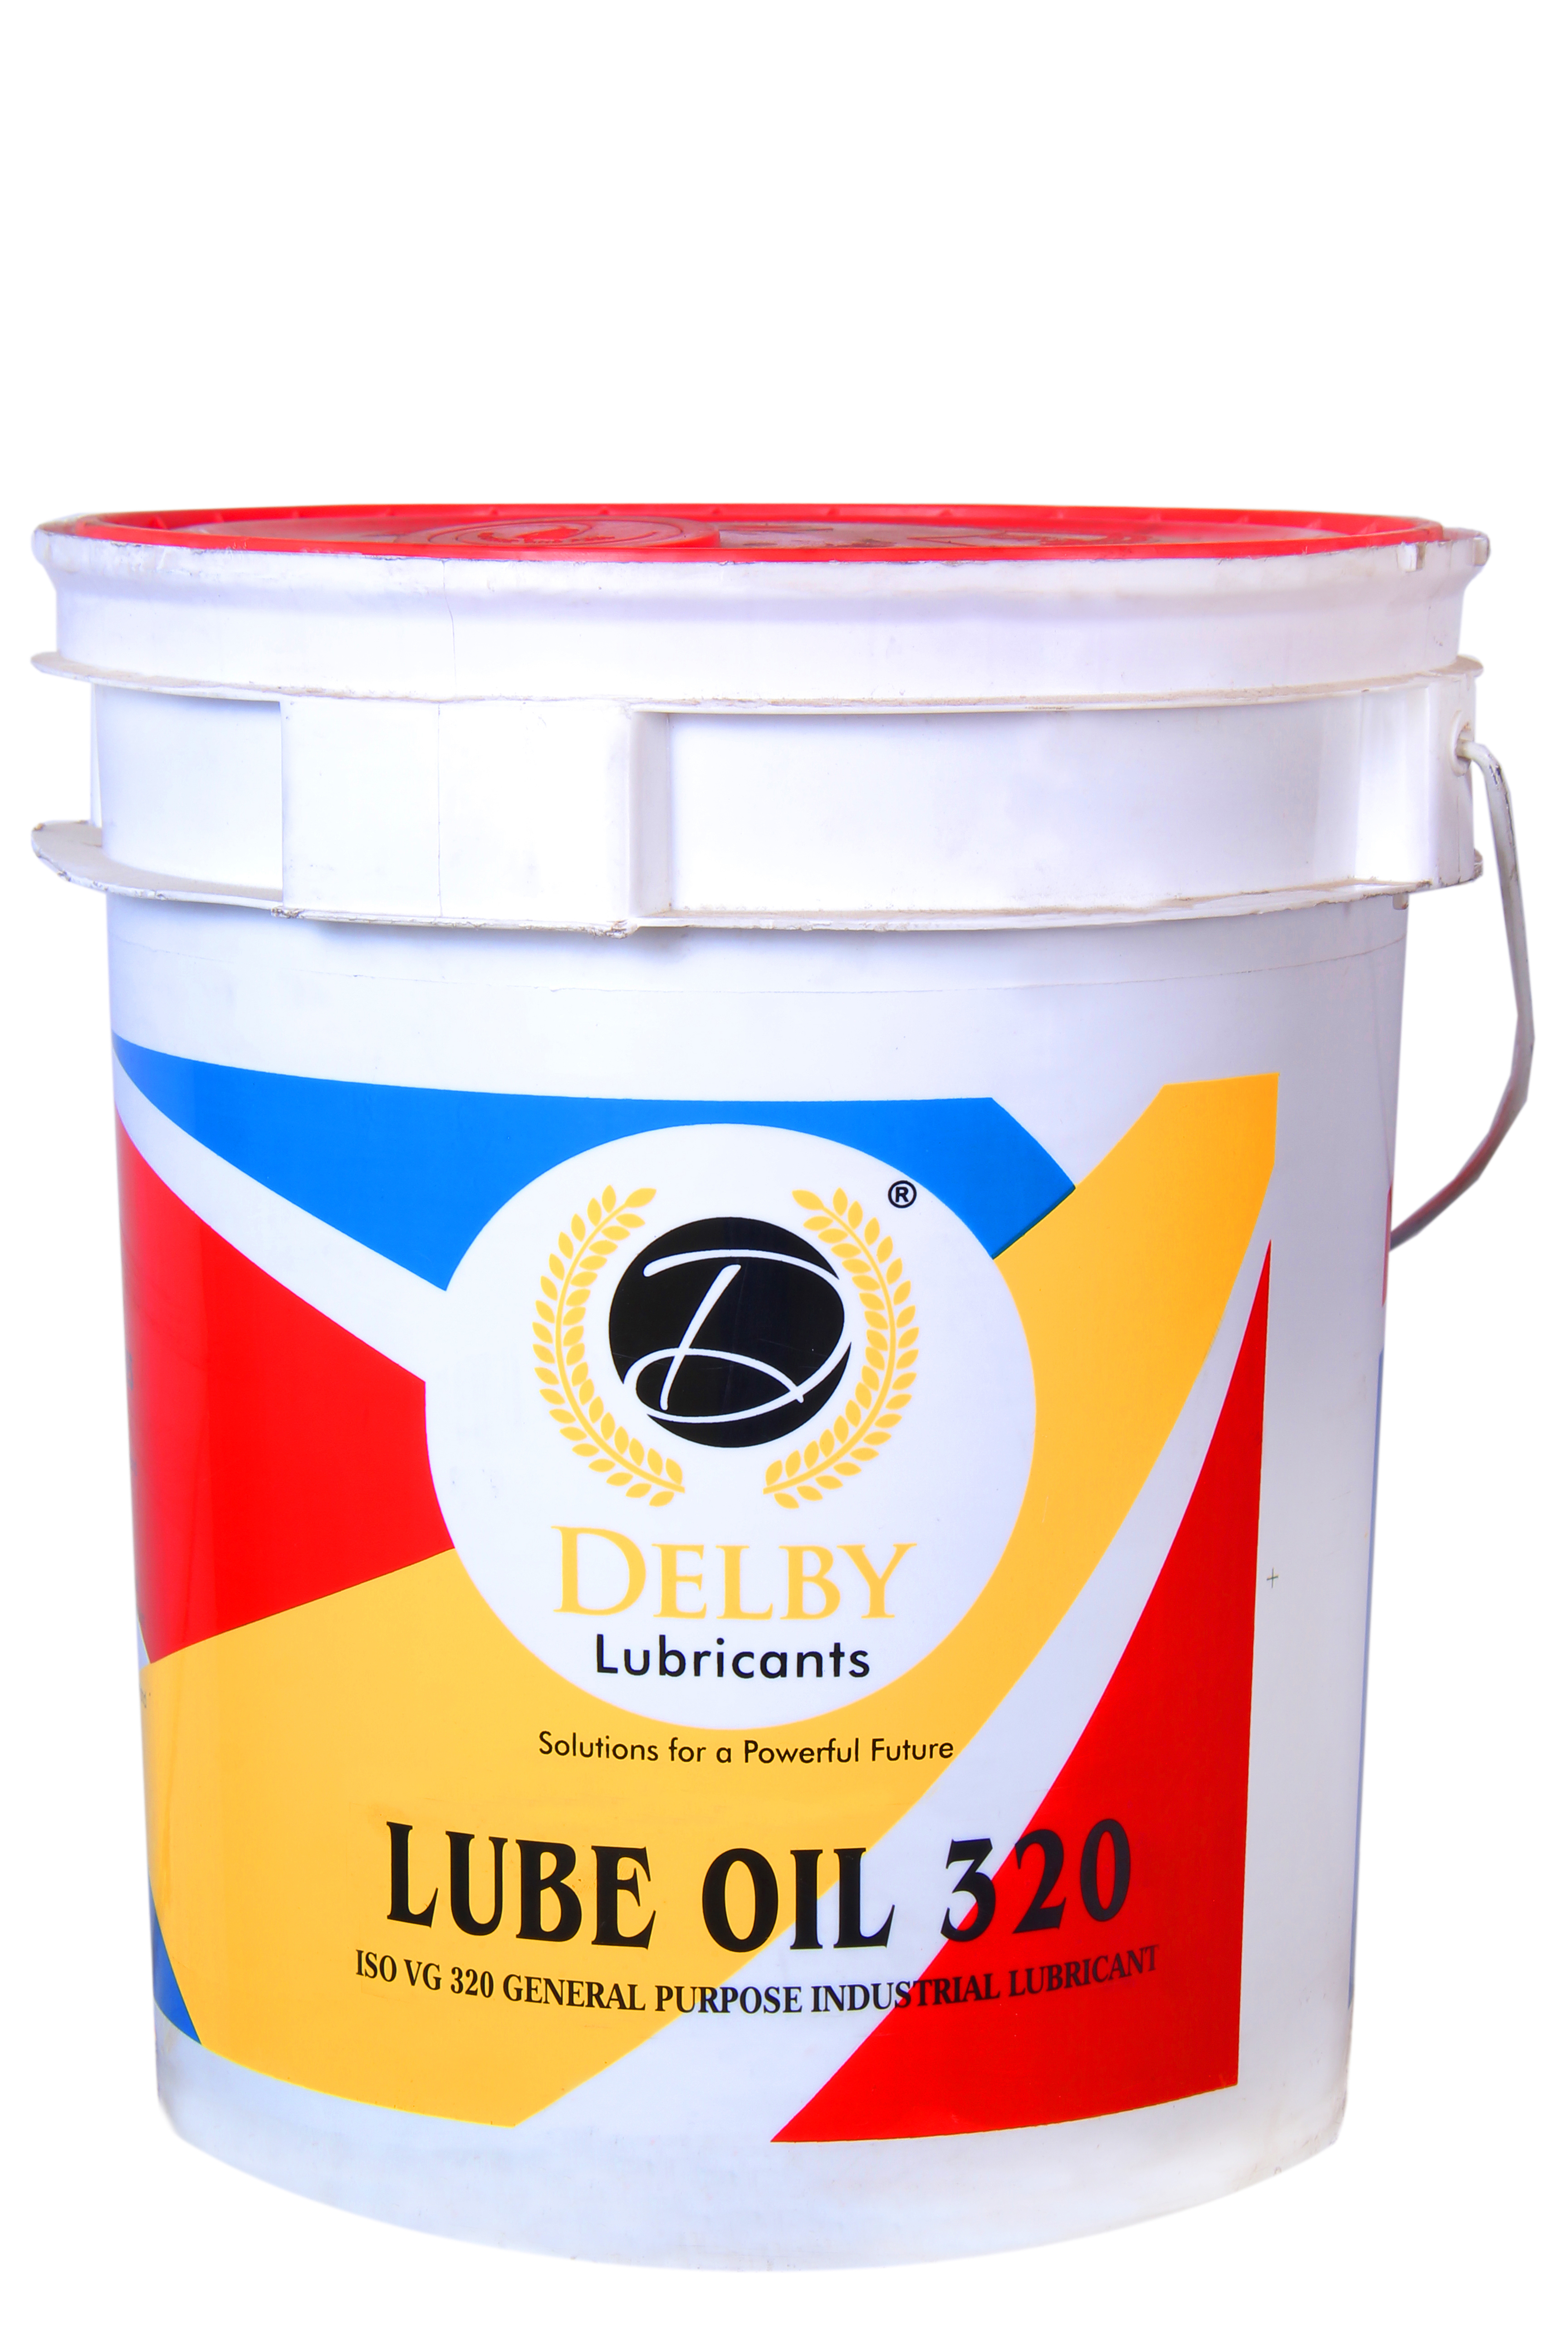 Lube oil